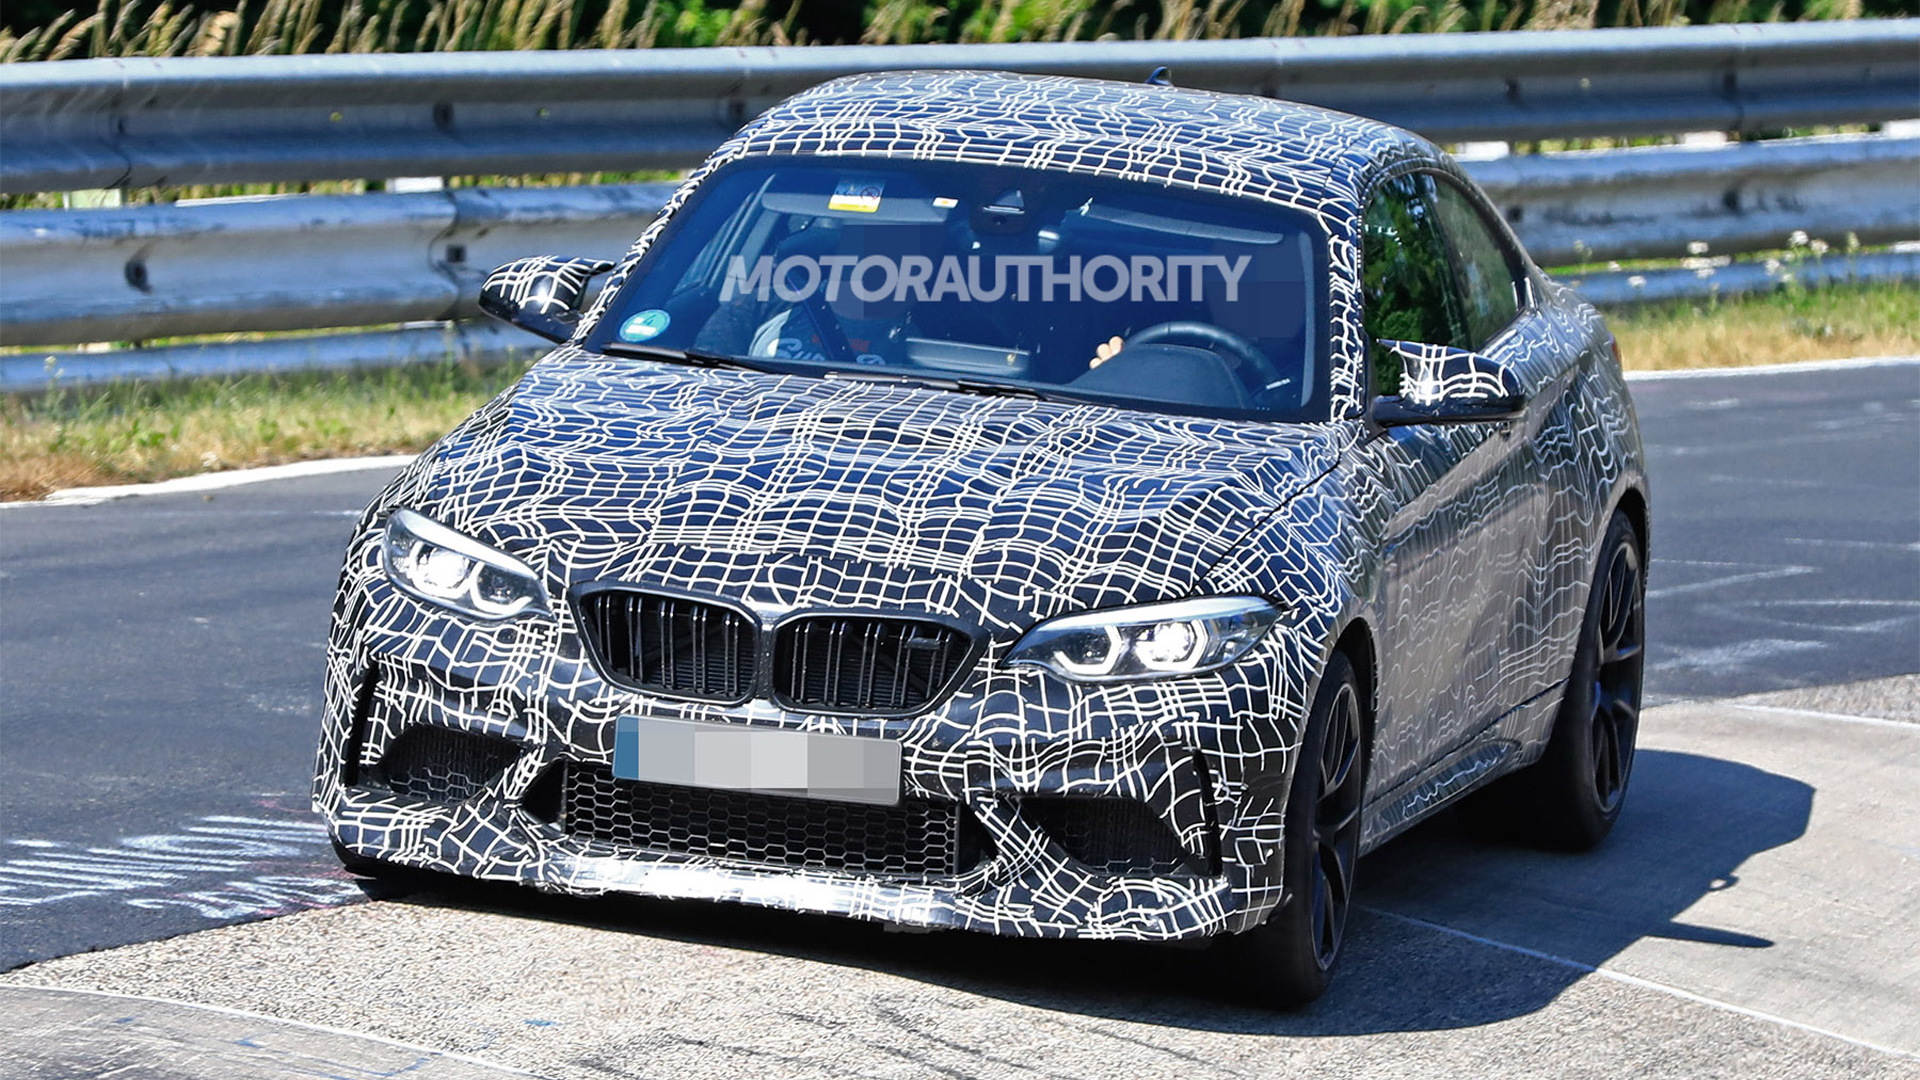 2020 BMW M2 CS spy shots - Image via S. Baldauf/SB-Medien